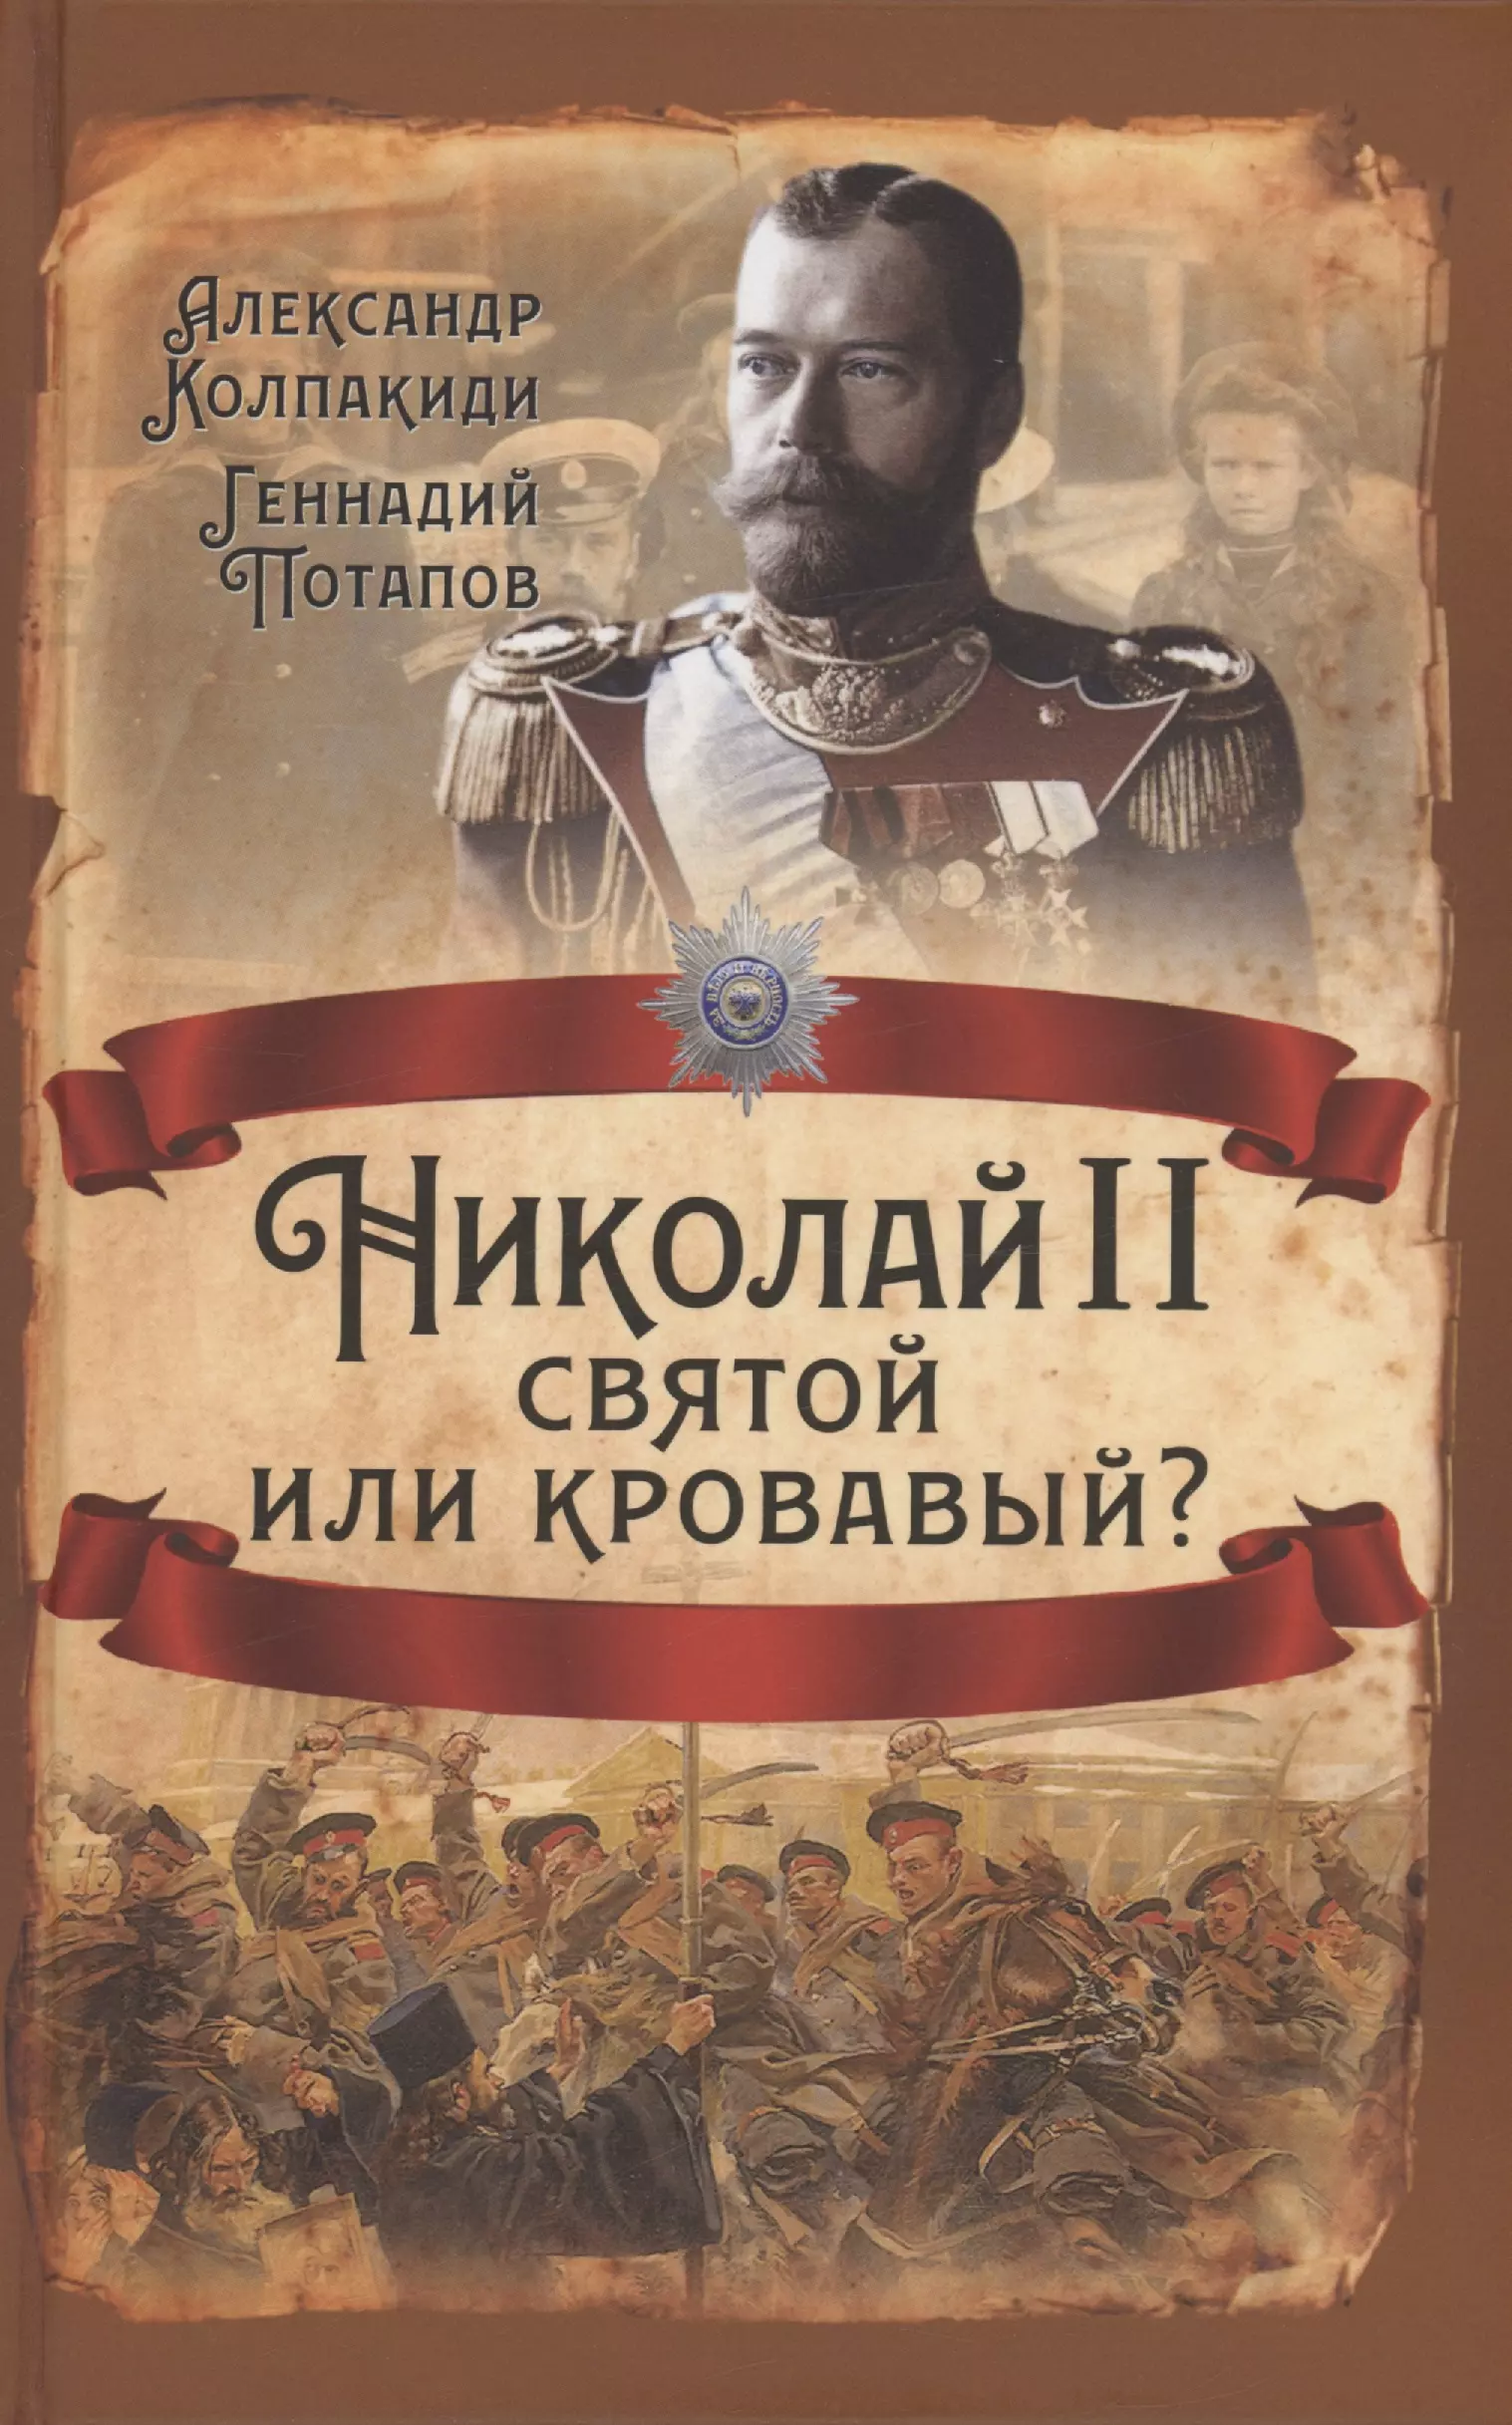 Колпакиди Александр Иванович - Николай II. Святой или кровавый?